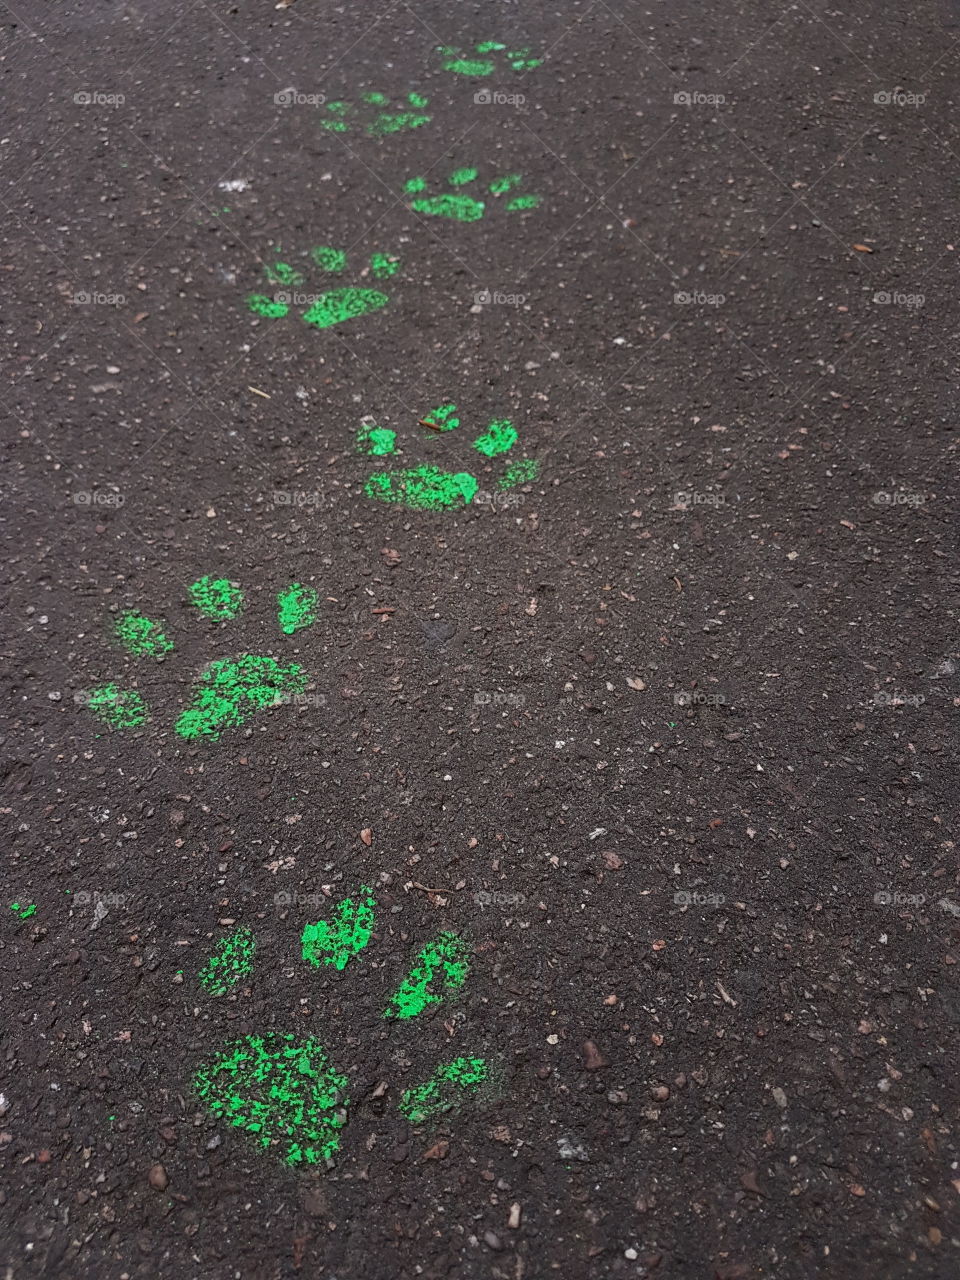 green footprints